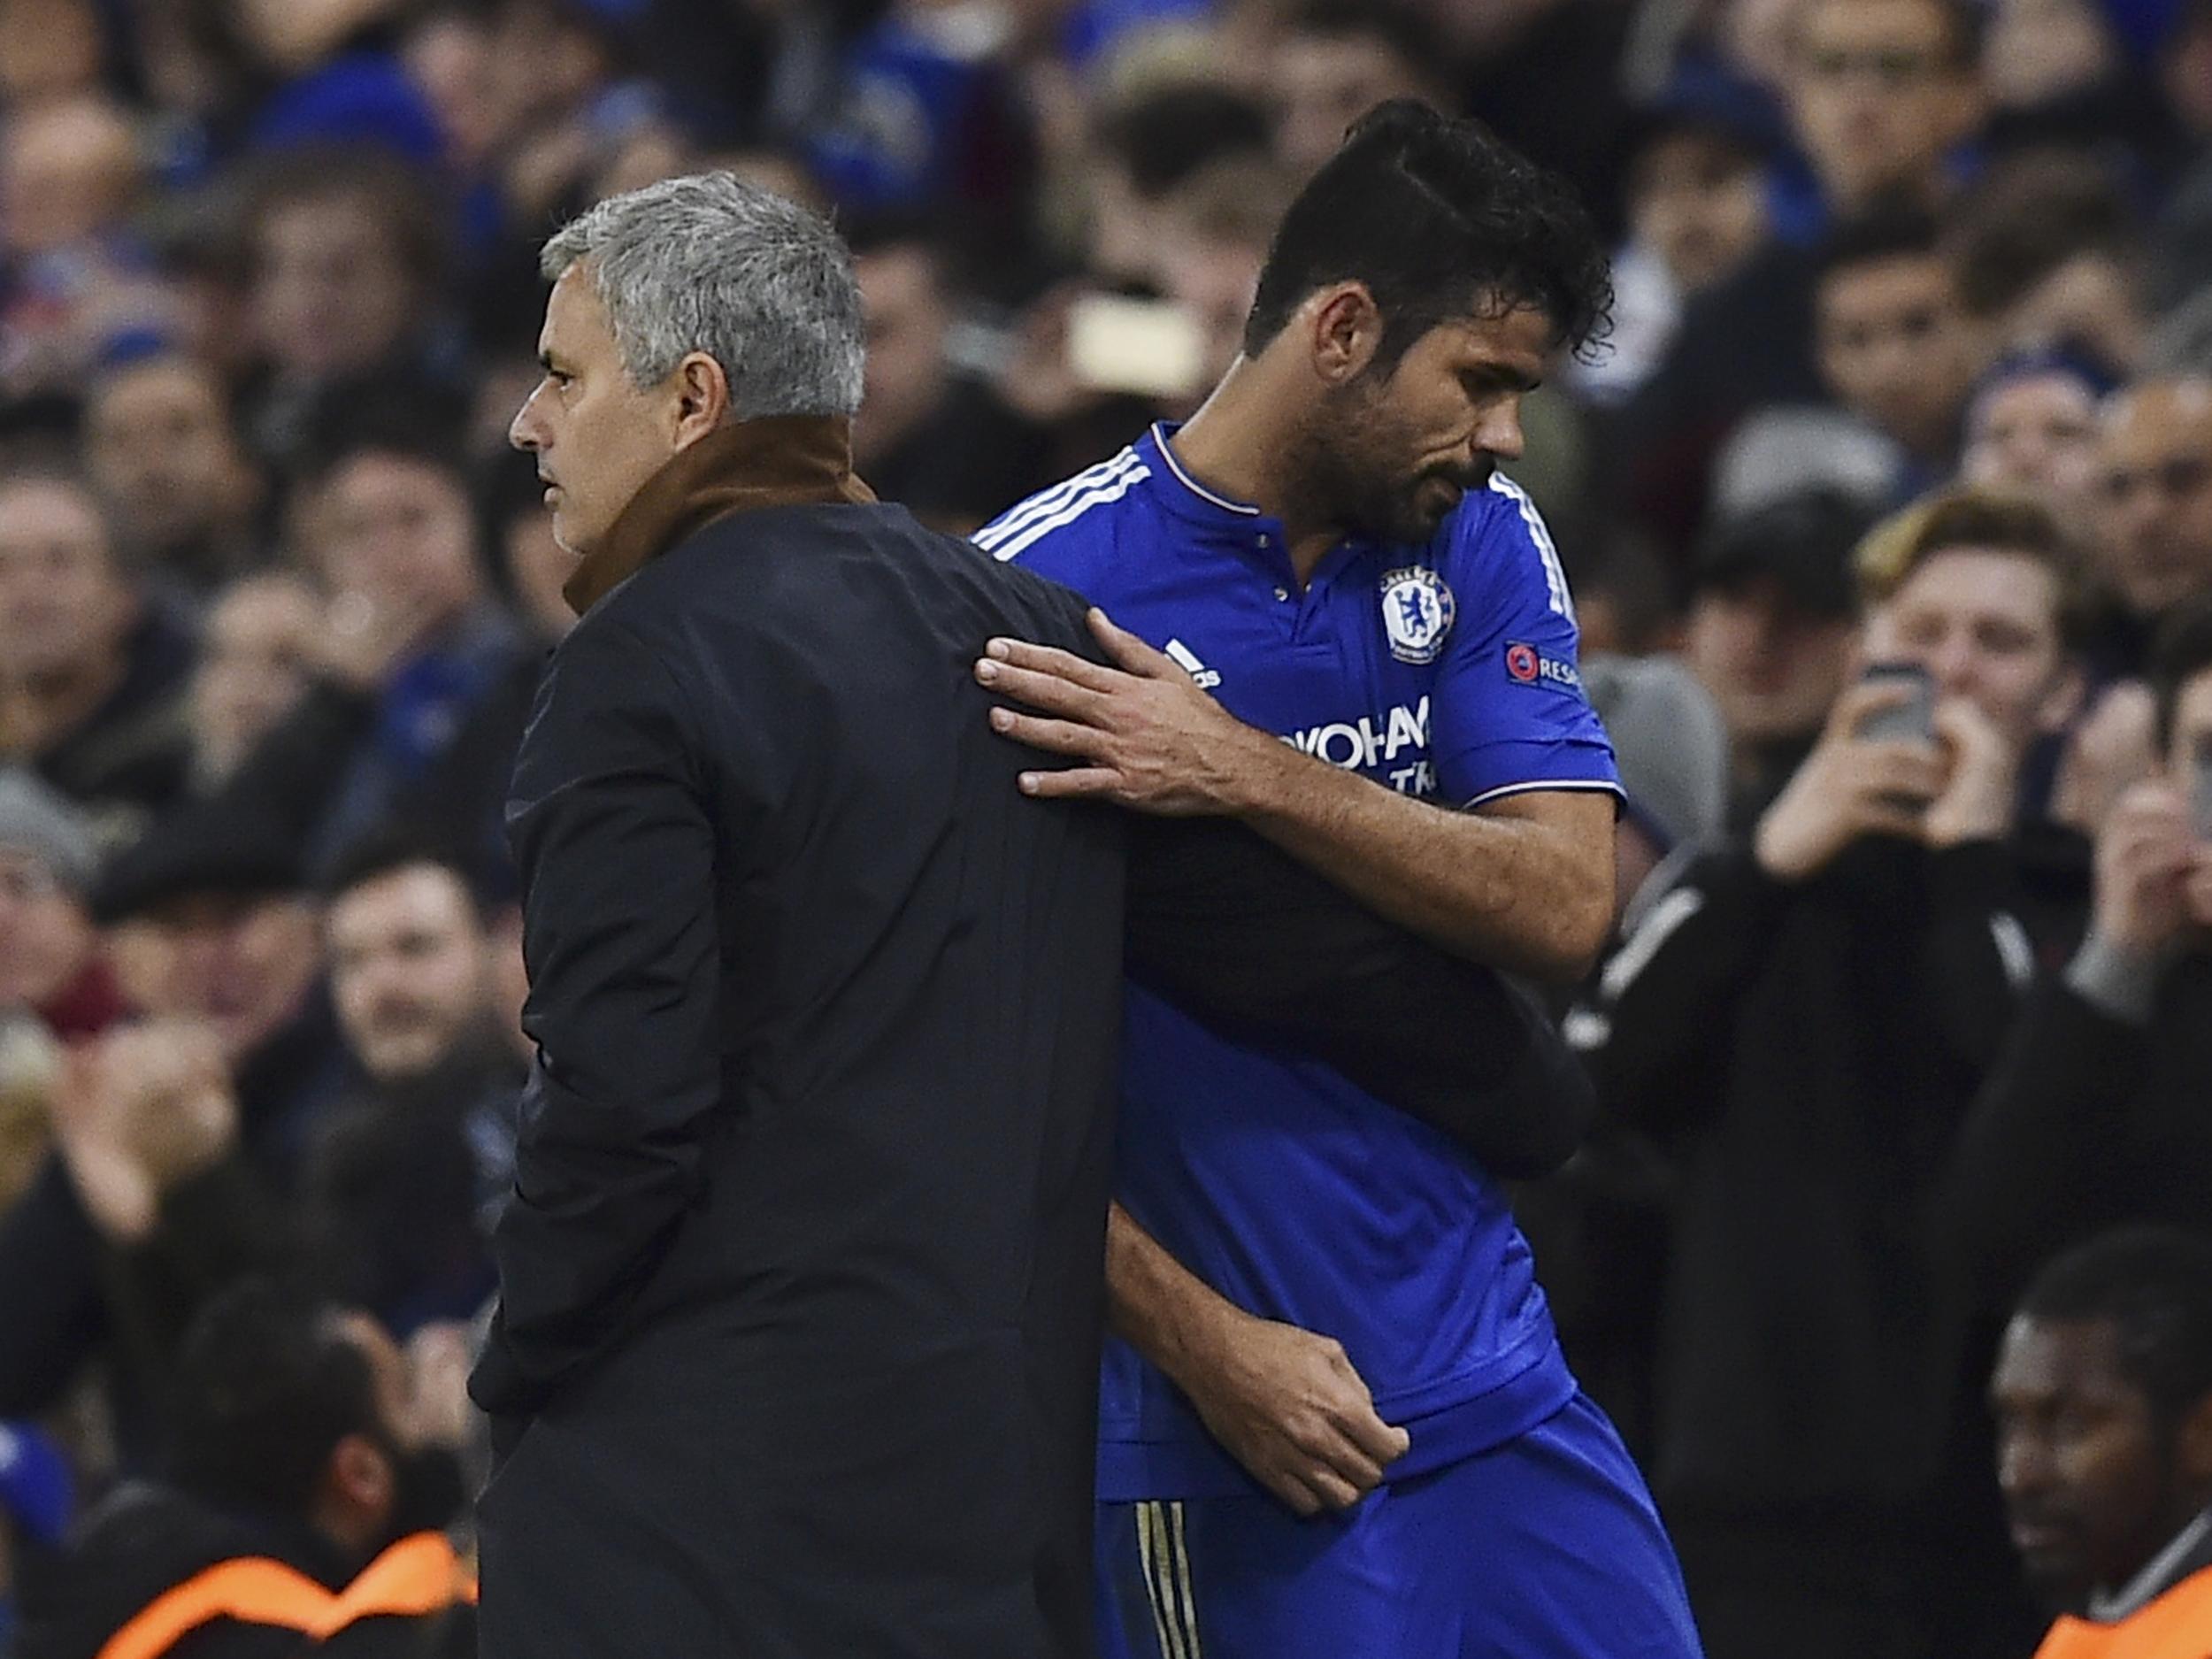 Costa felt sorry for the way Mourinho left Chelsea